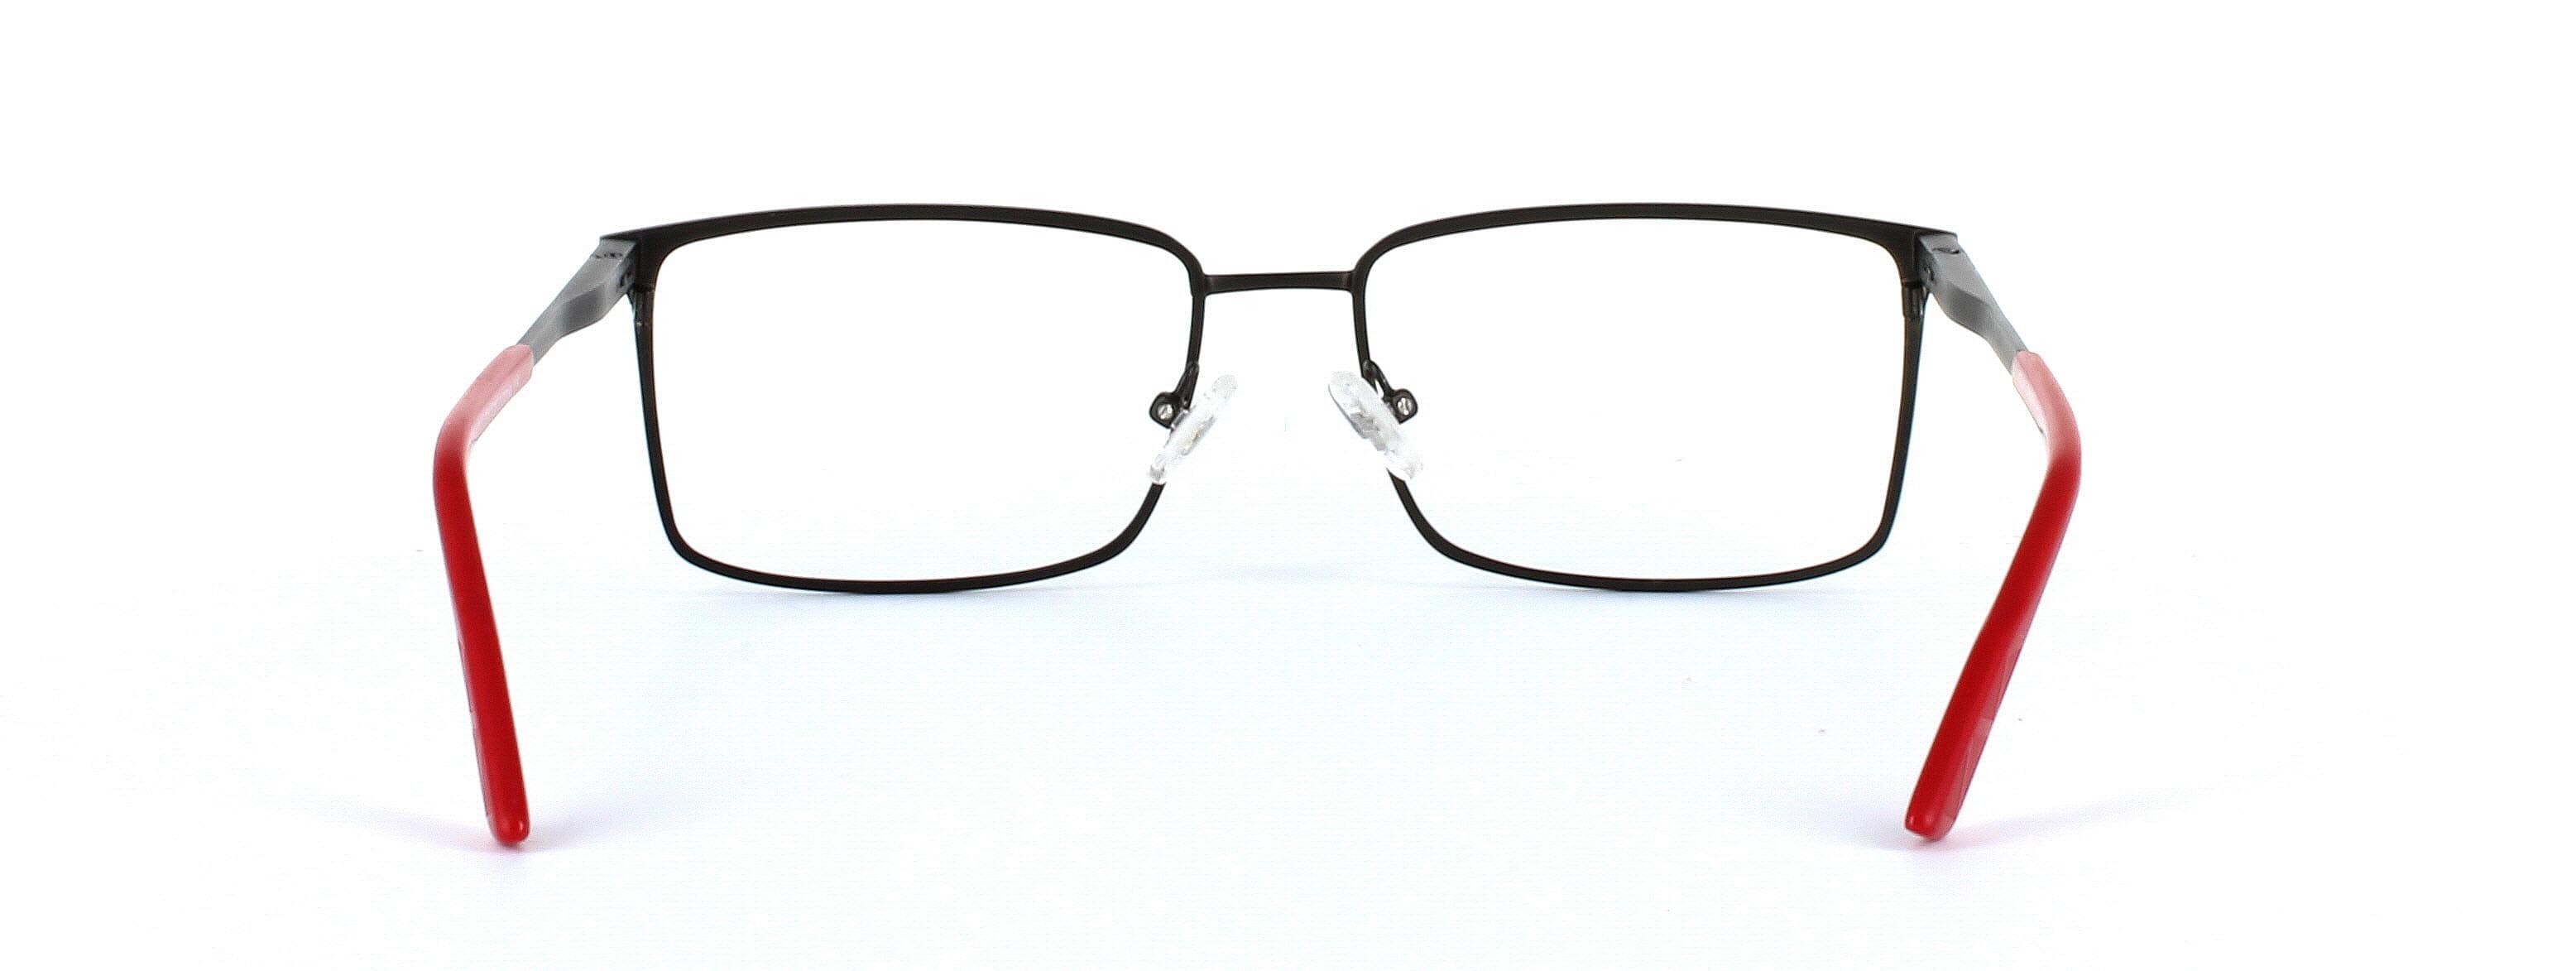 Helly Hansen HH 1028 Black Full Rim Rectangular Metal Glasses - Image View 3